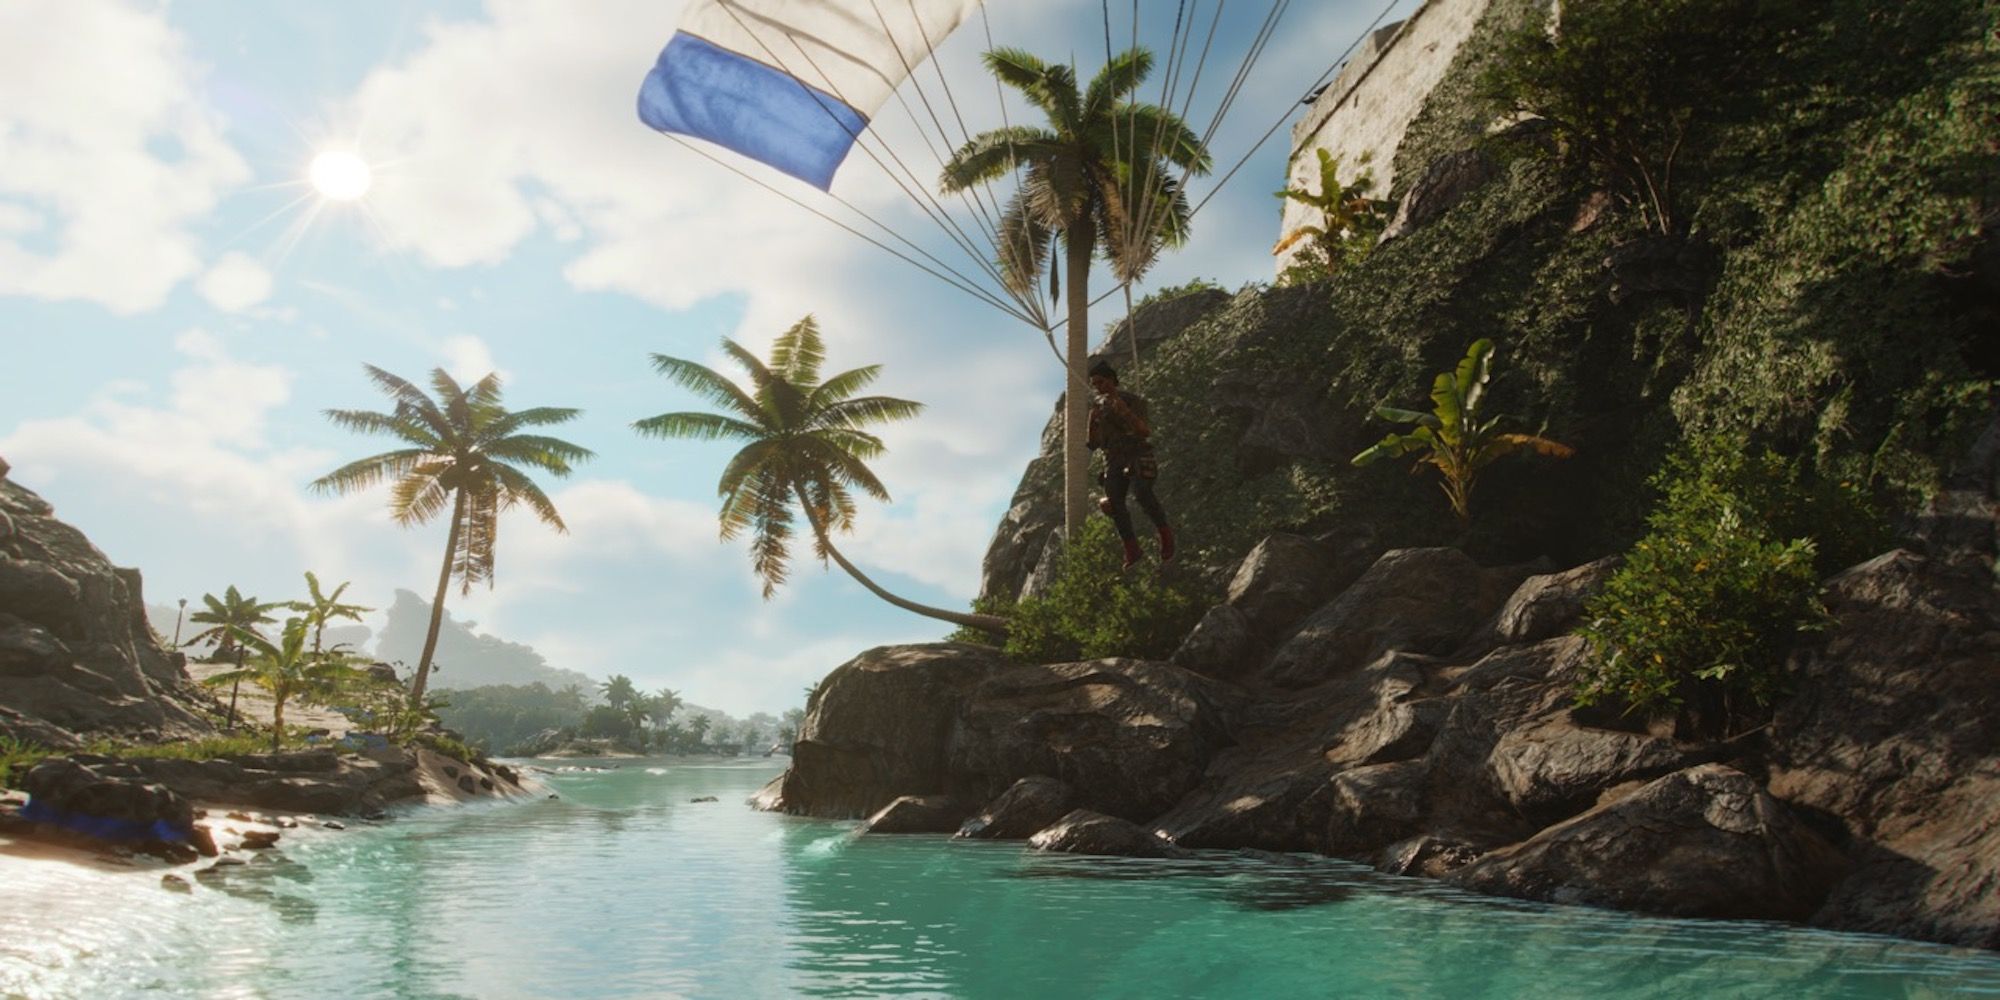 Parachuting in Far Cry 6